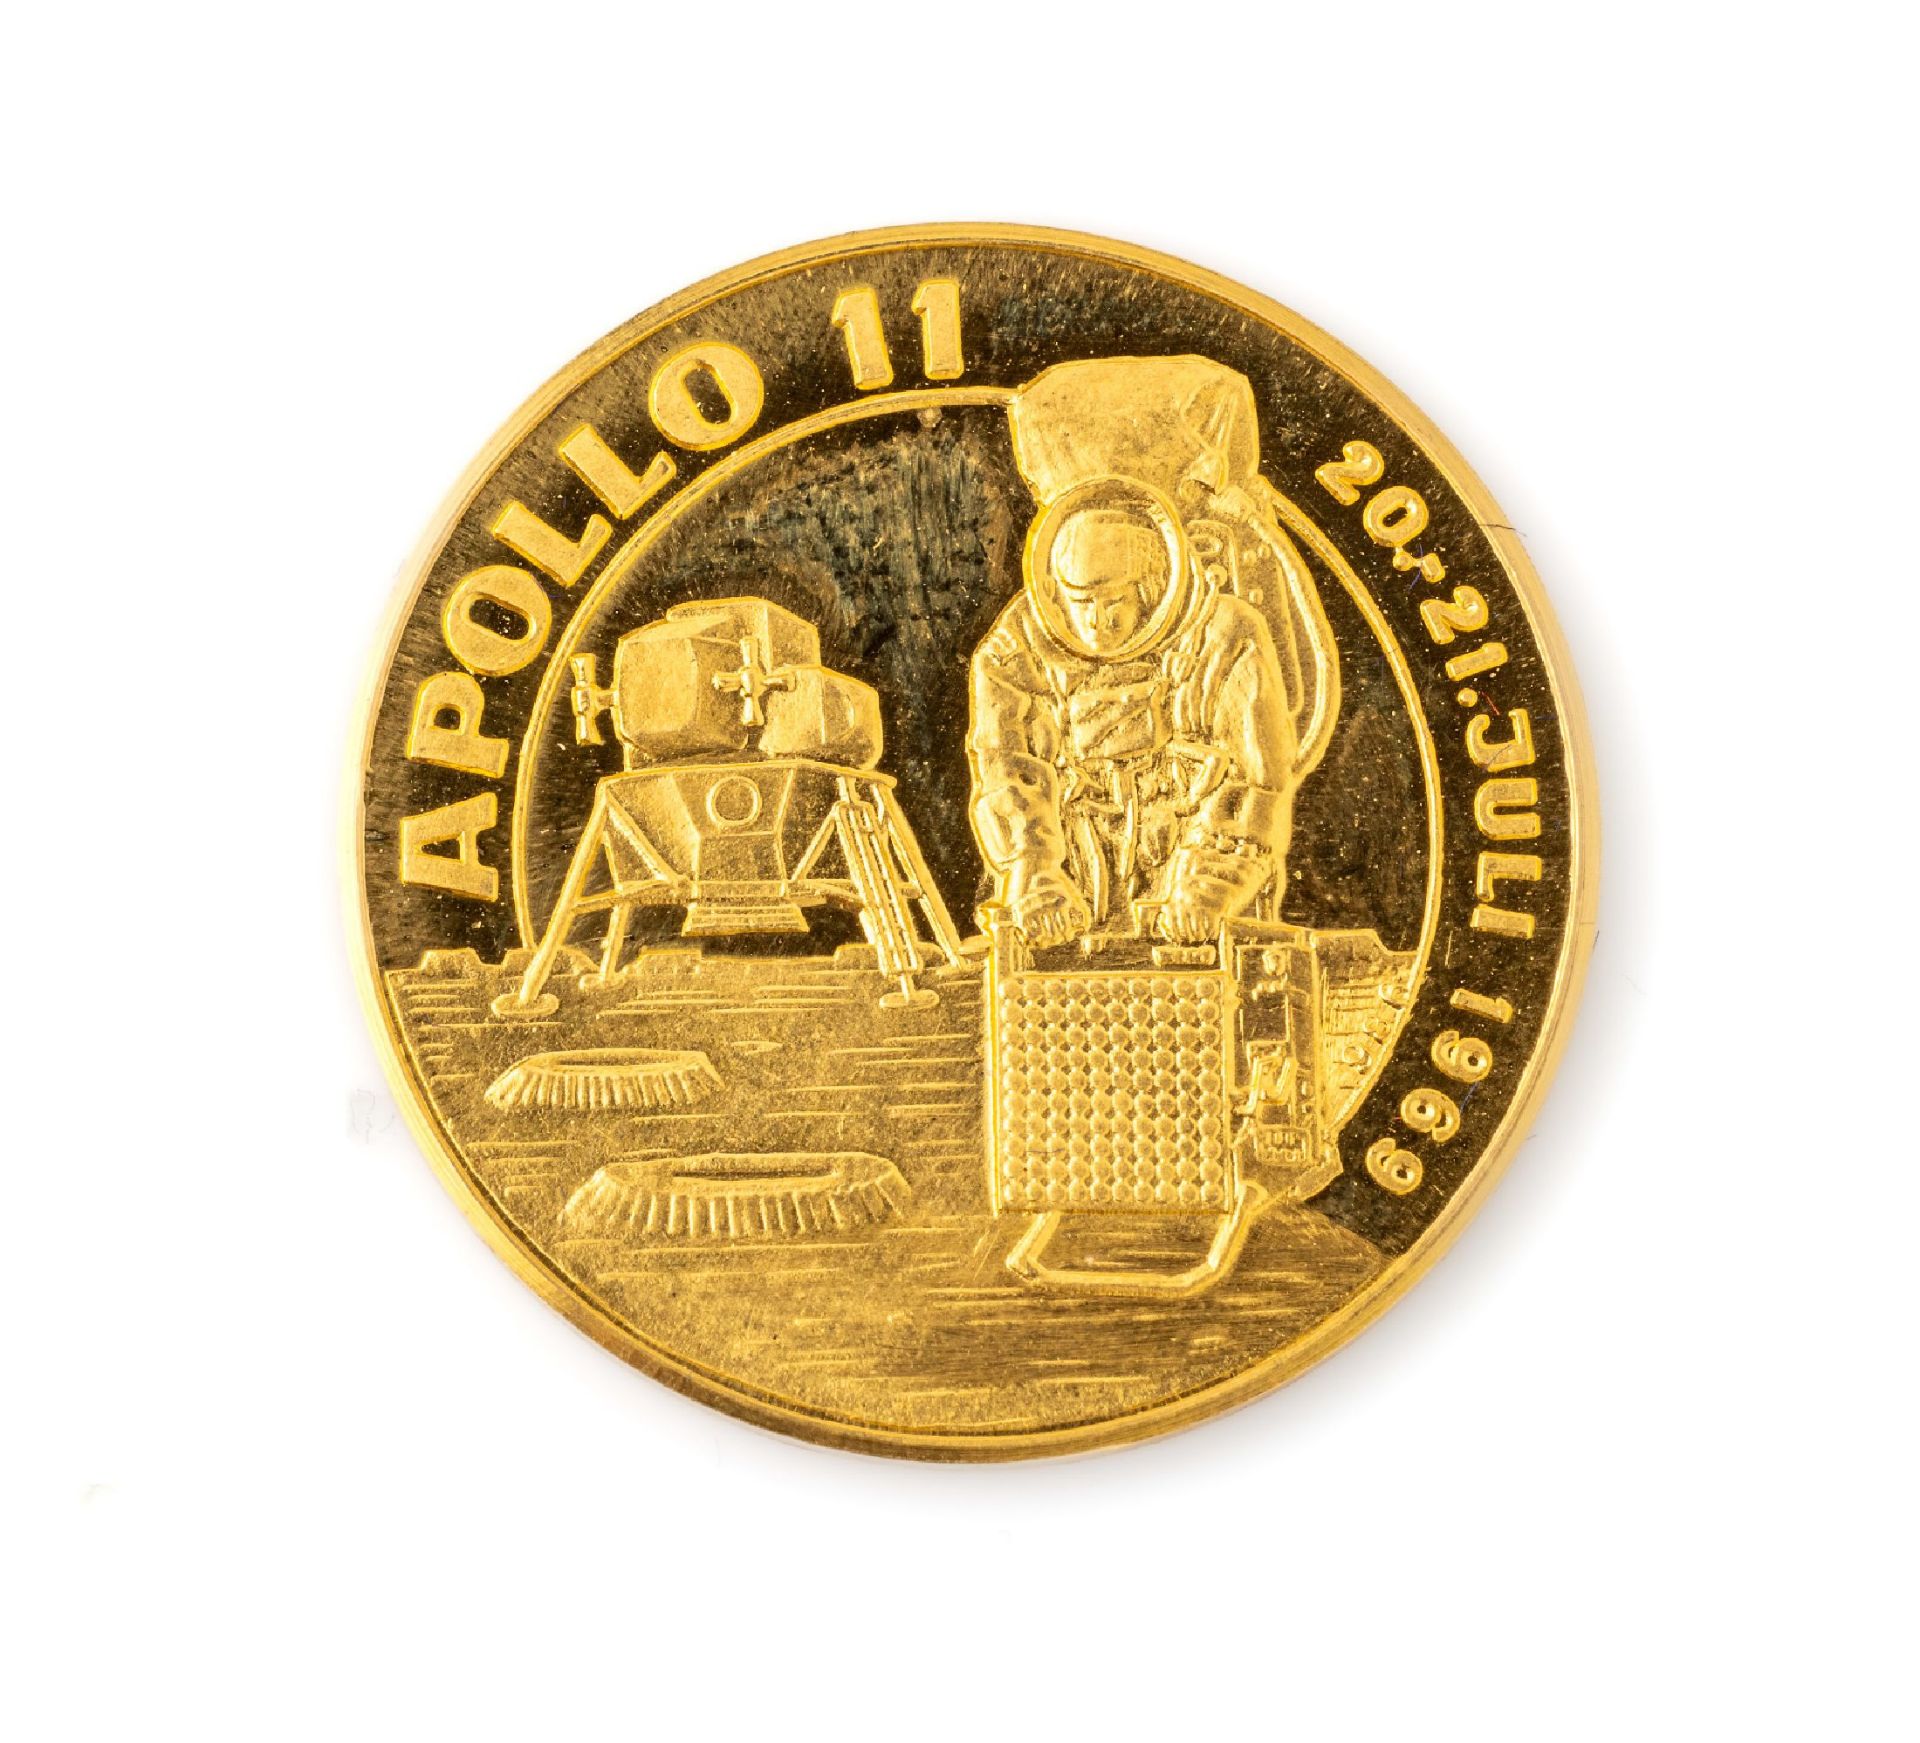 Goldmedaille Apollo 11, GG 986/000, AV: Darstellung